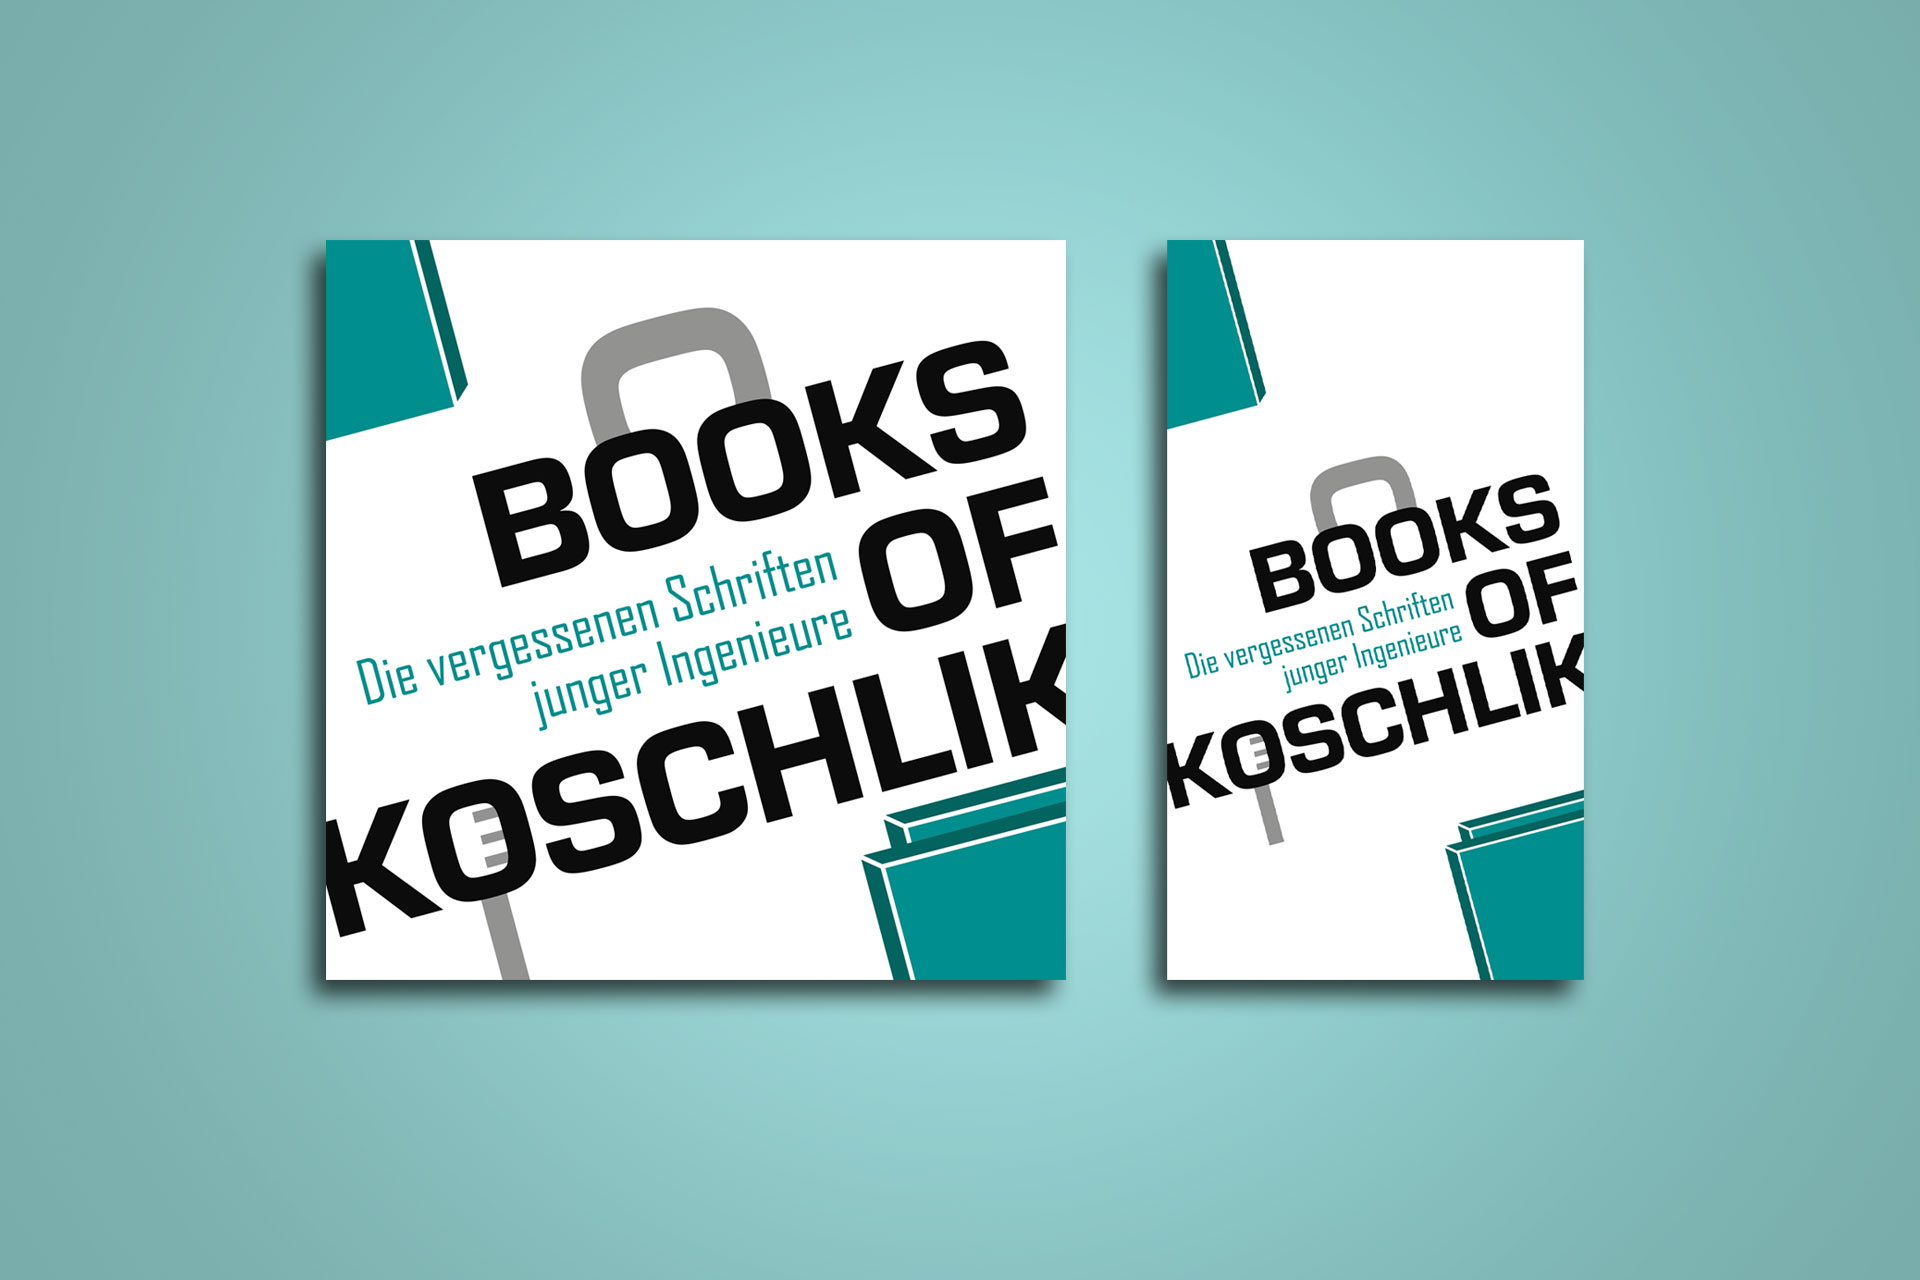 Books of Koschlik – Cover für Podcast